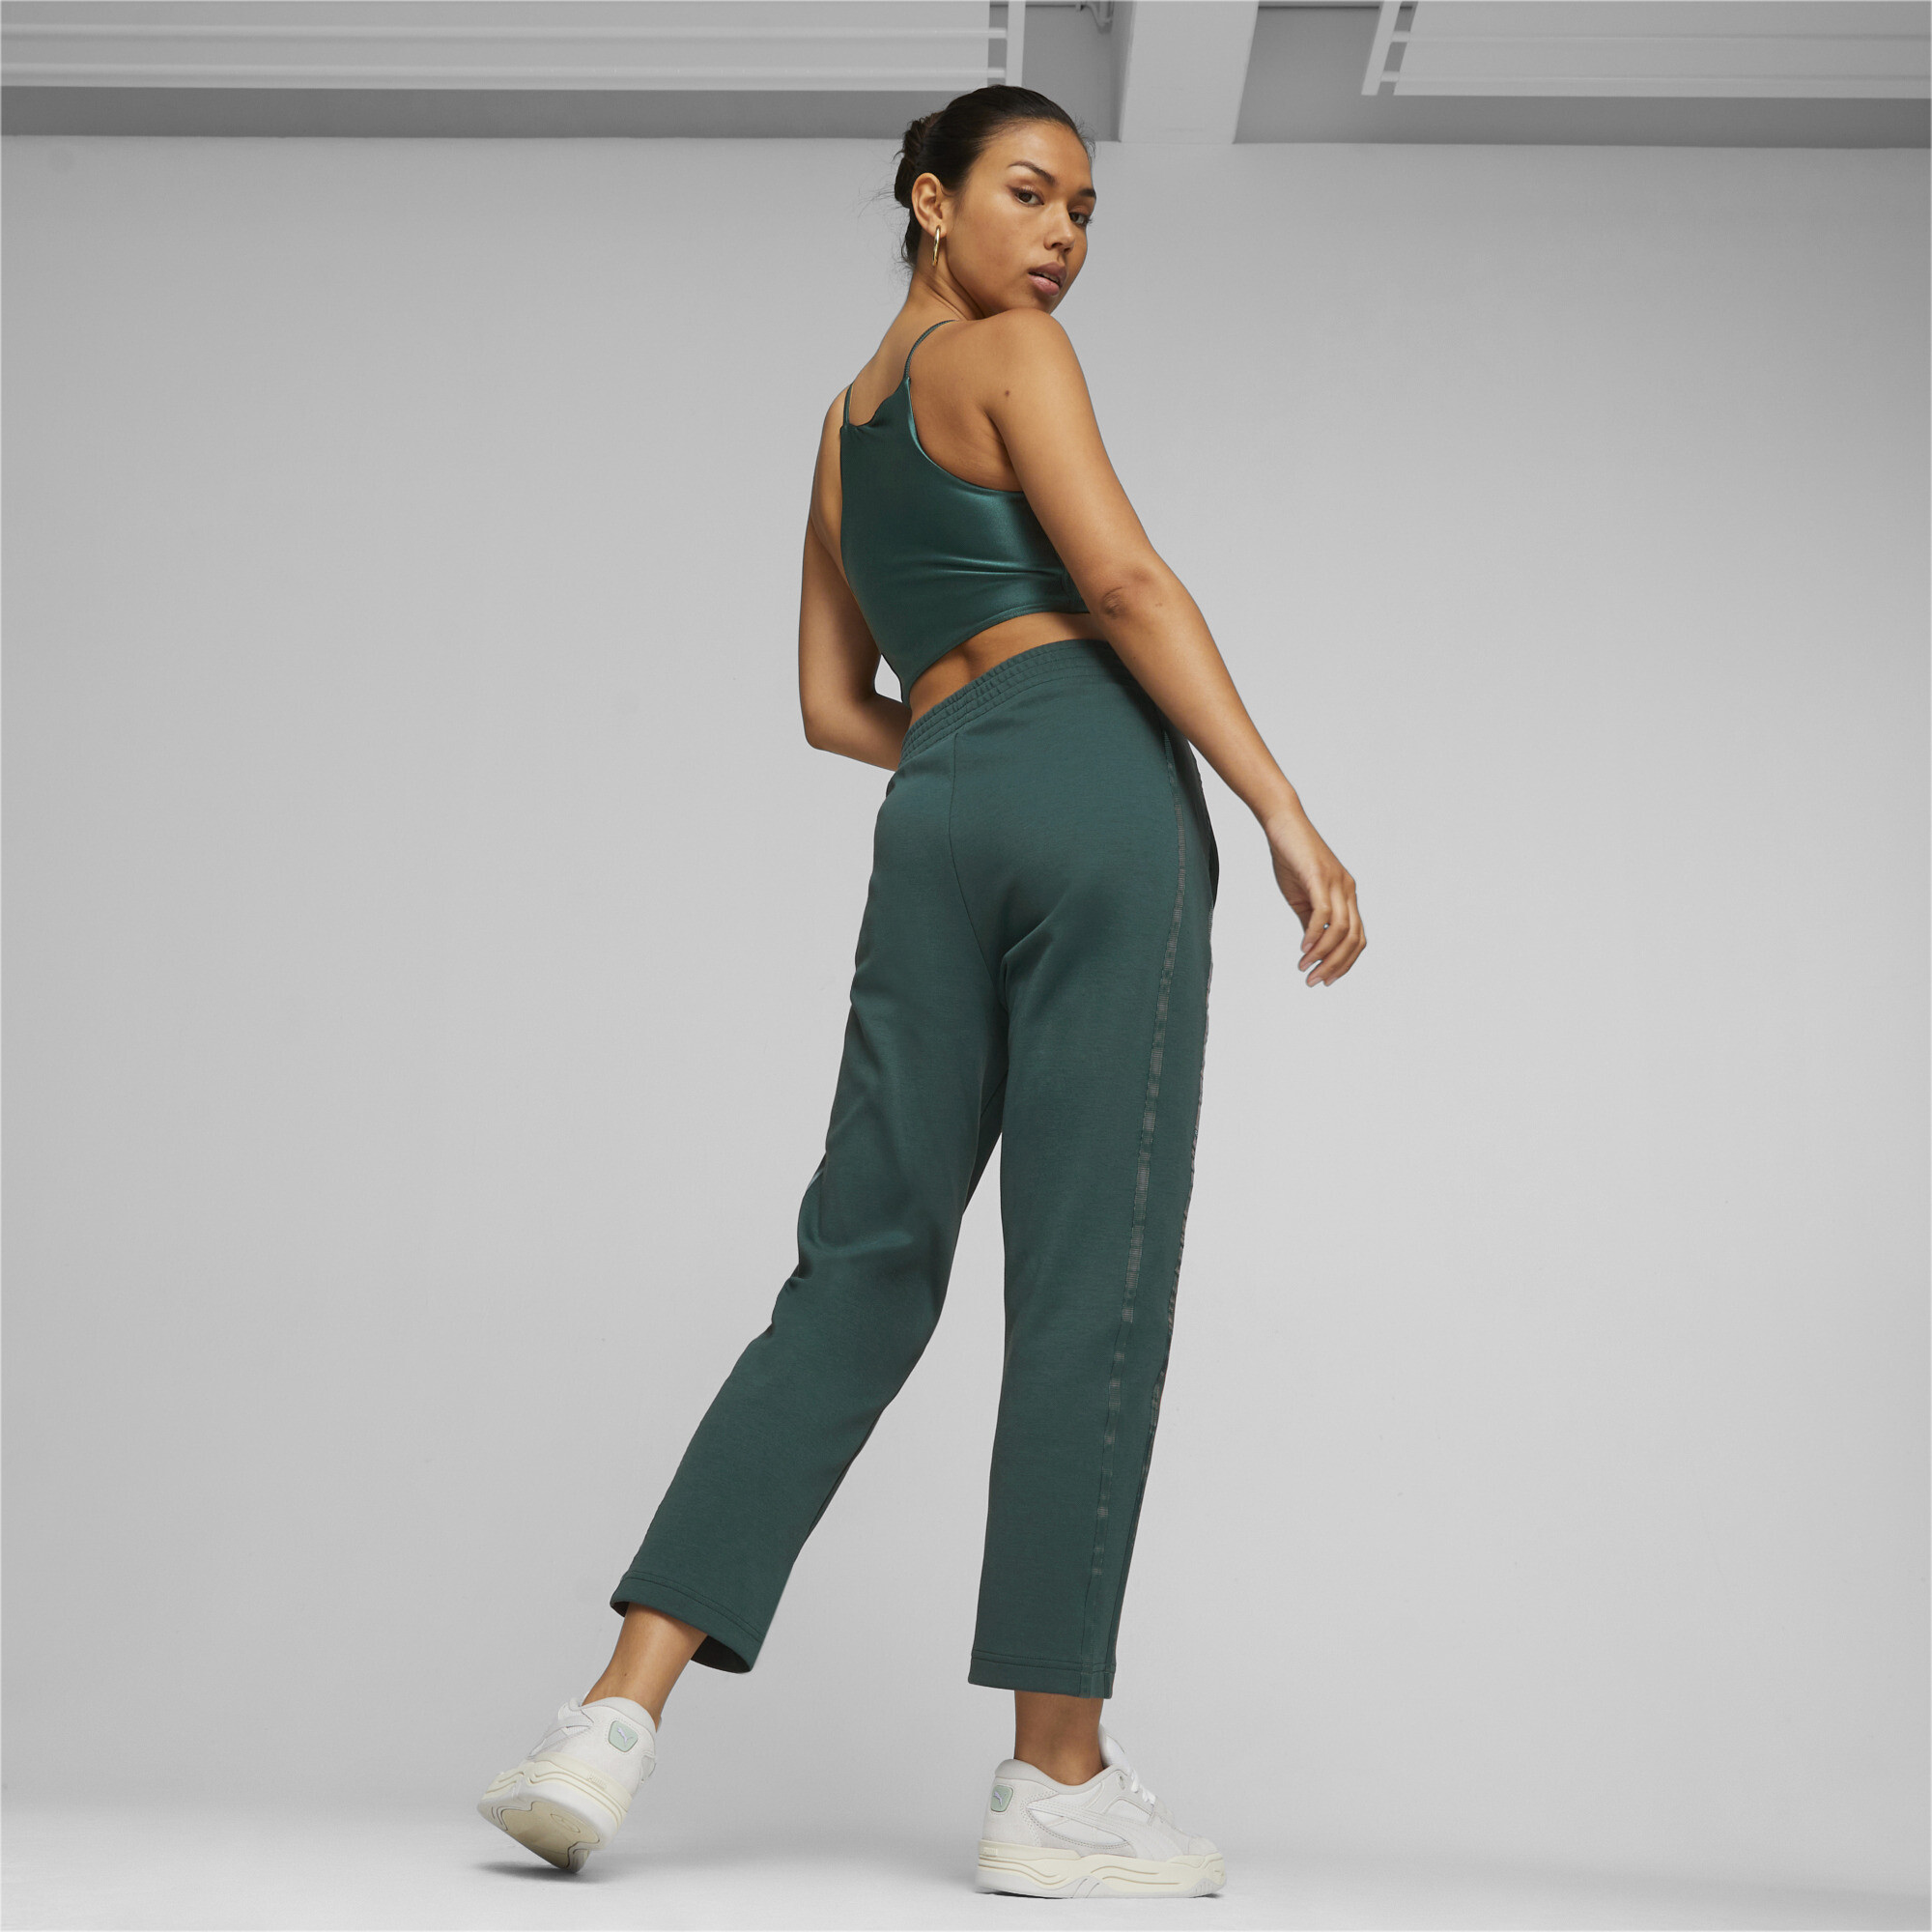 Women's PUMA T7 High Waist Pants In 40 - Green, Size Small